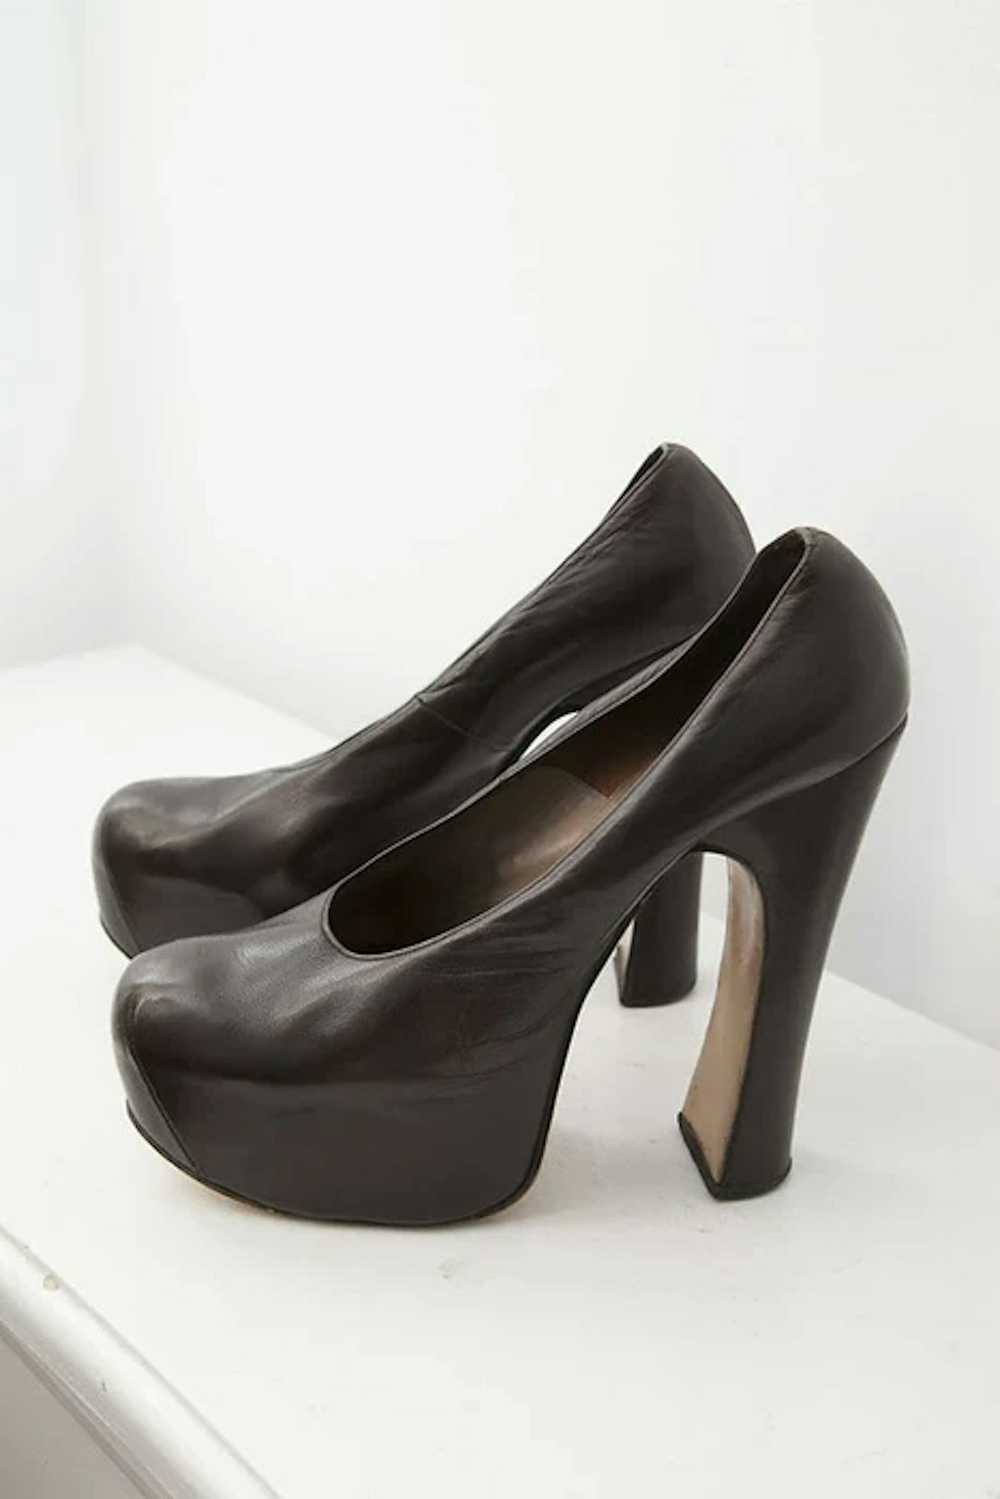 Vivienne Westwood 90's Court Platform heels - image 4